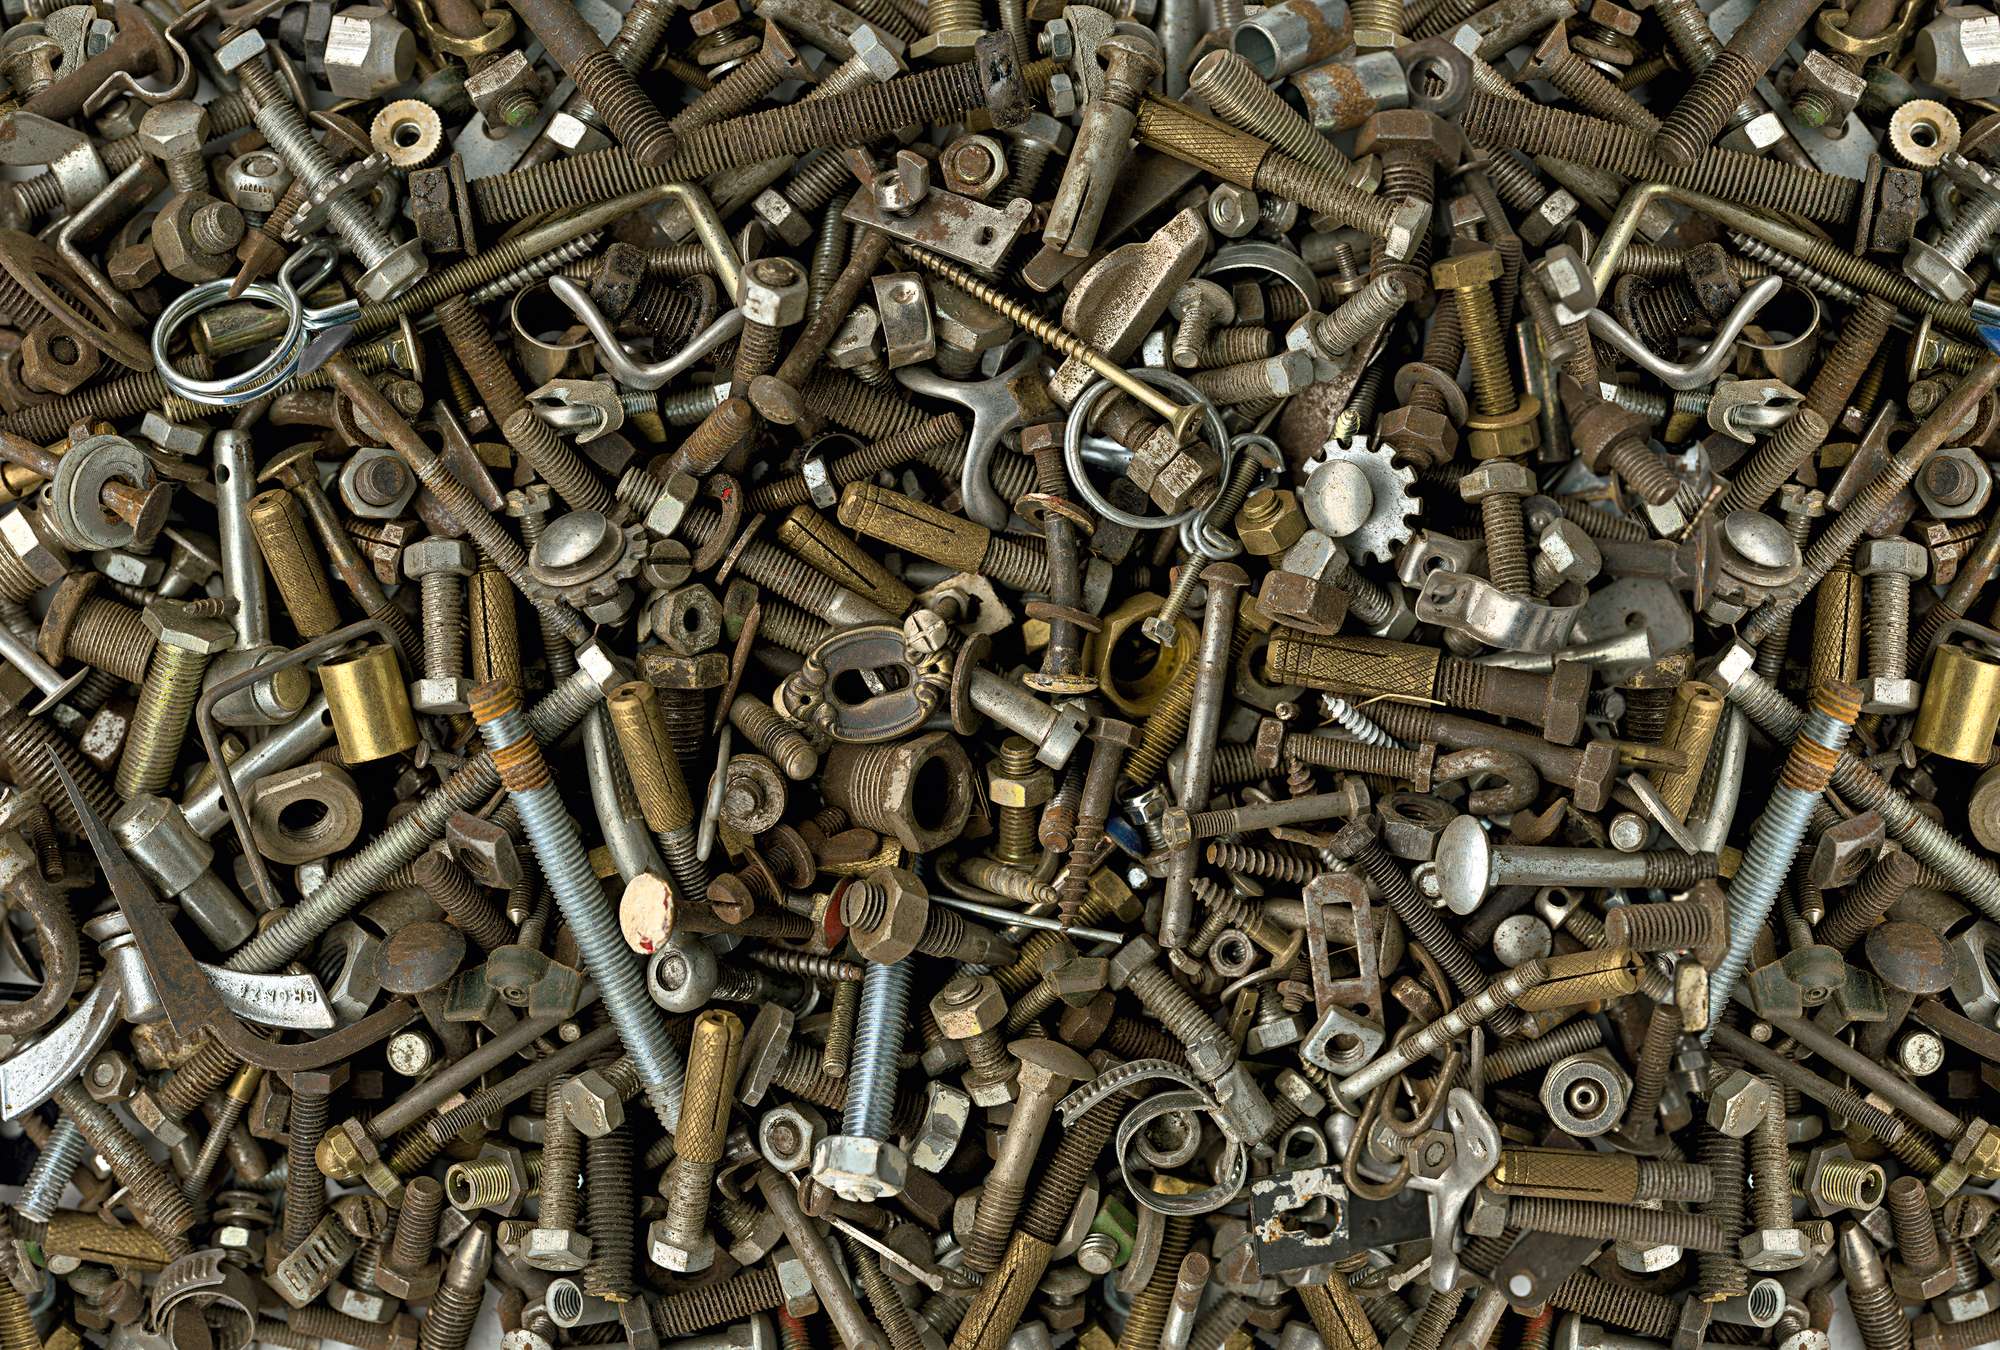             Photo wallpaper detail of screws
        